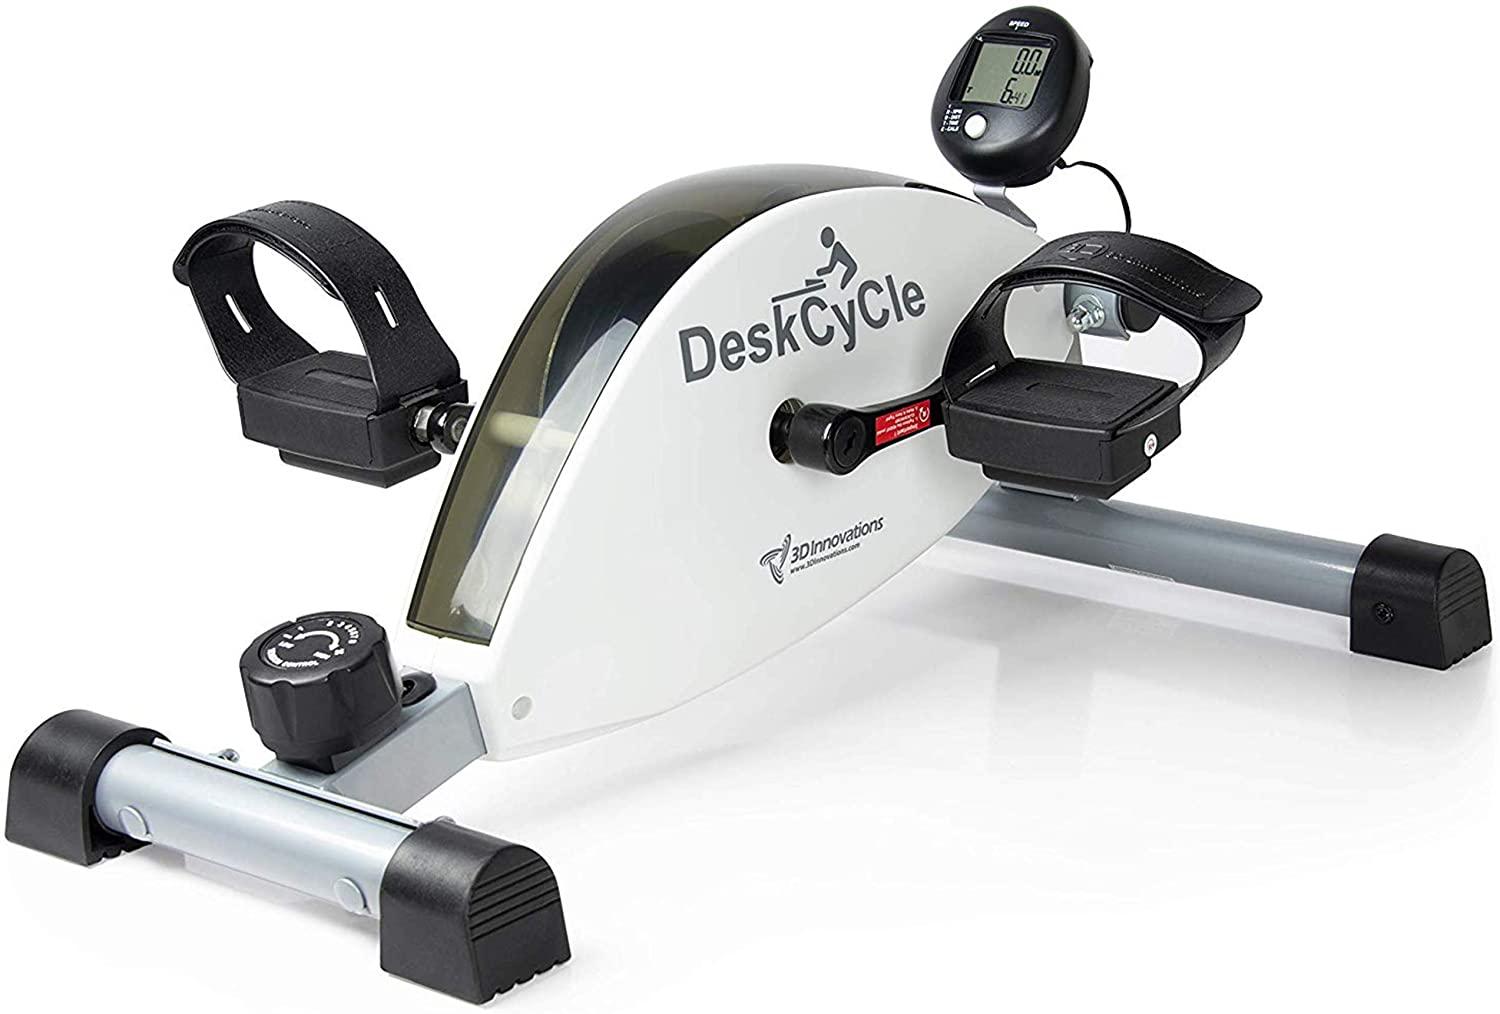 DeskCycle Under Desk Bike Pedal Exerciser for $147 Shipped